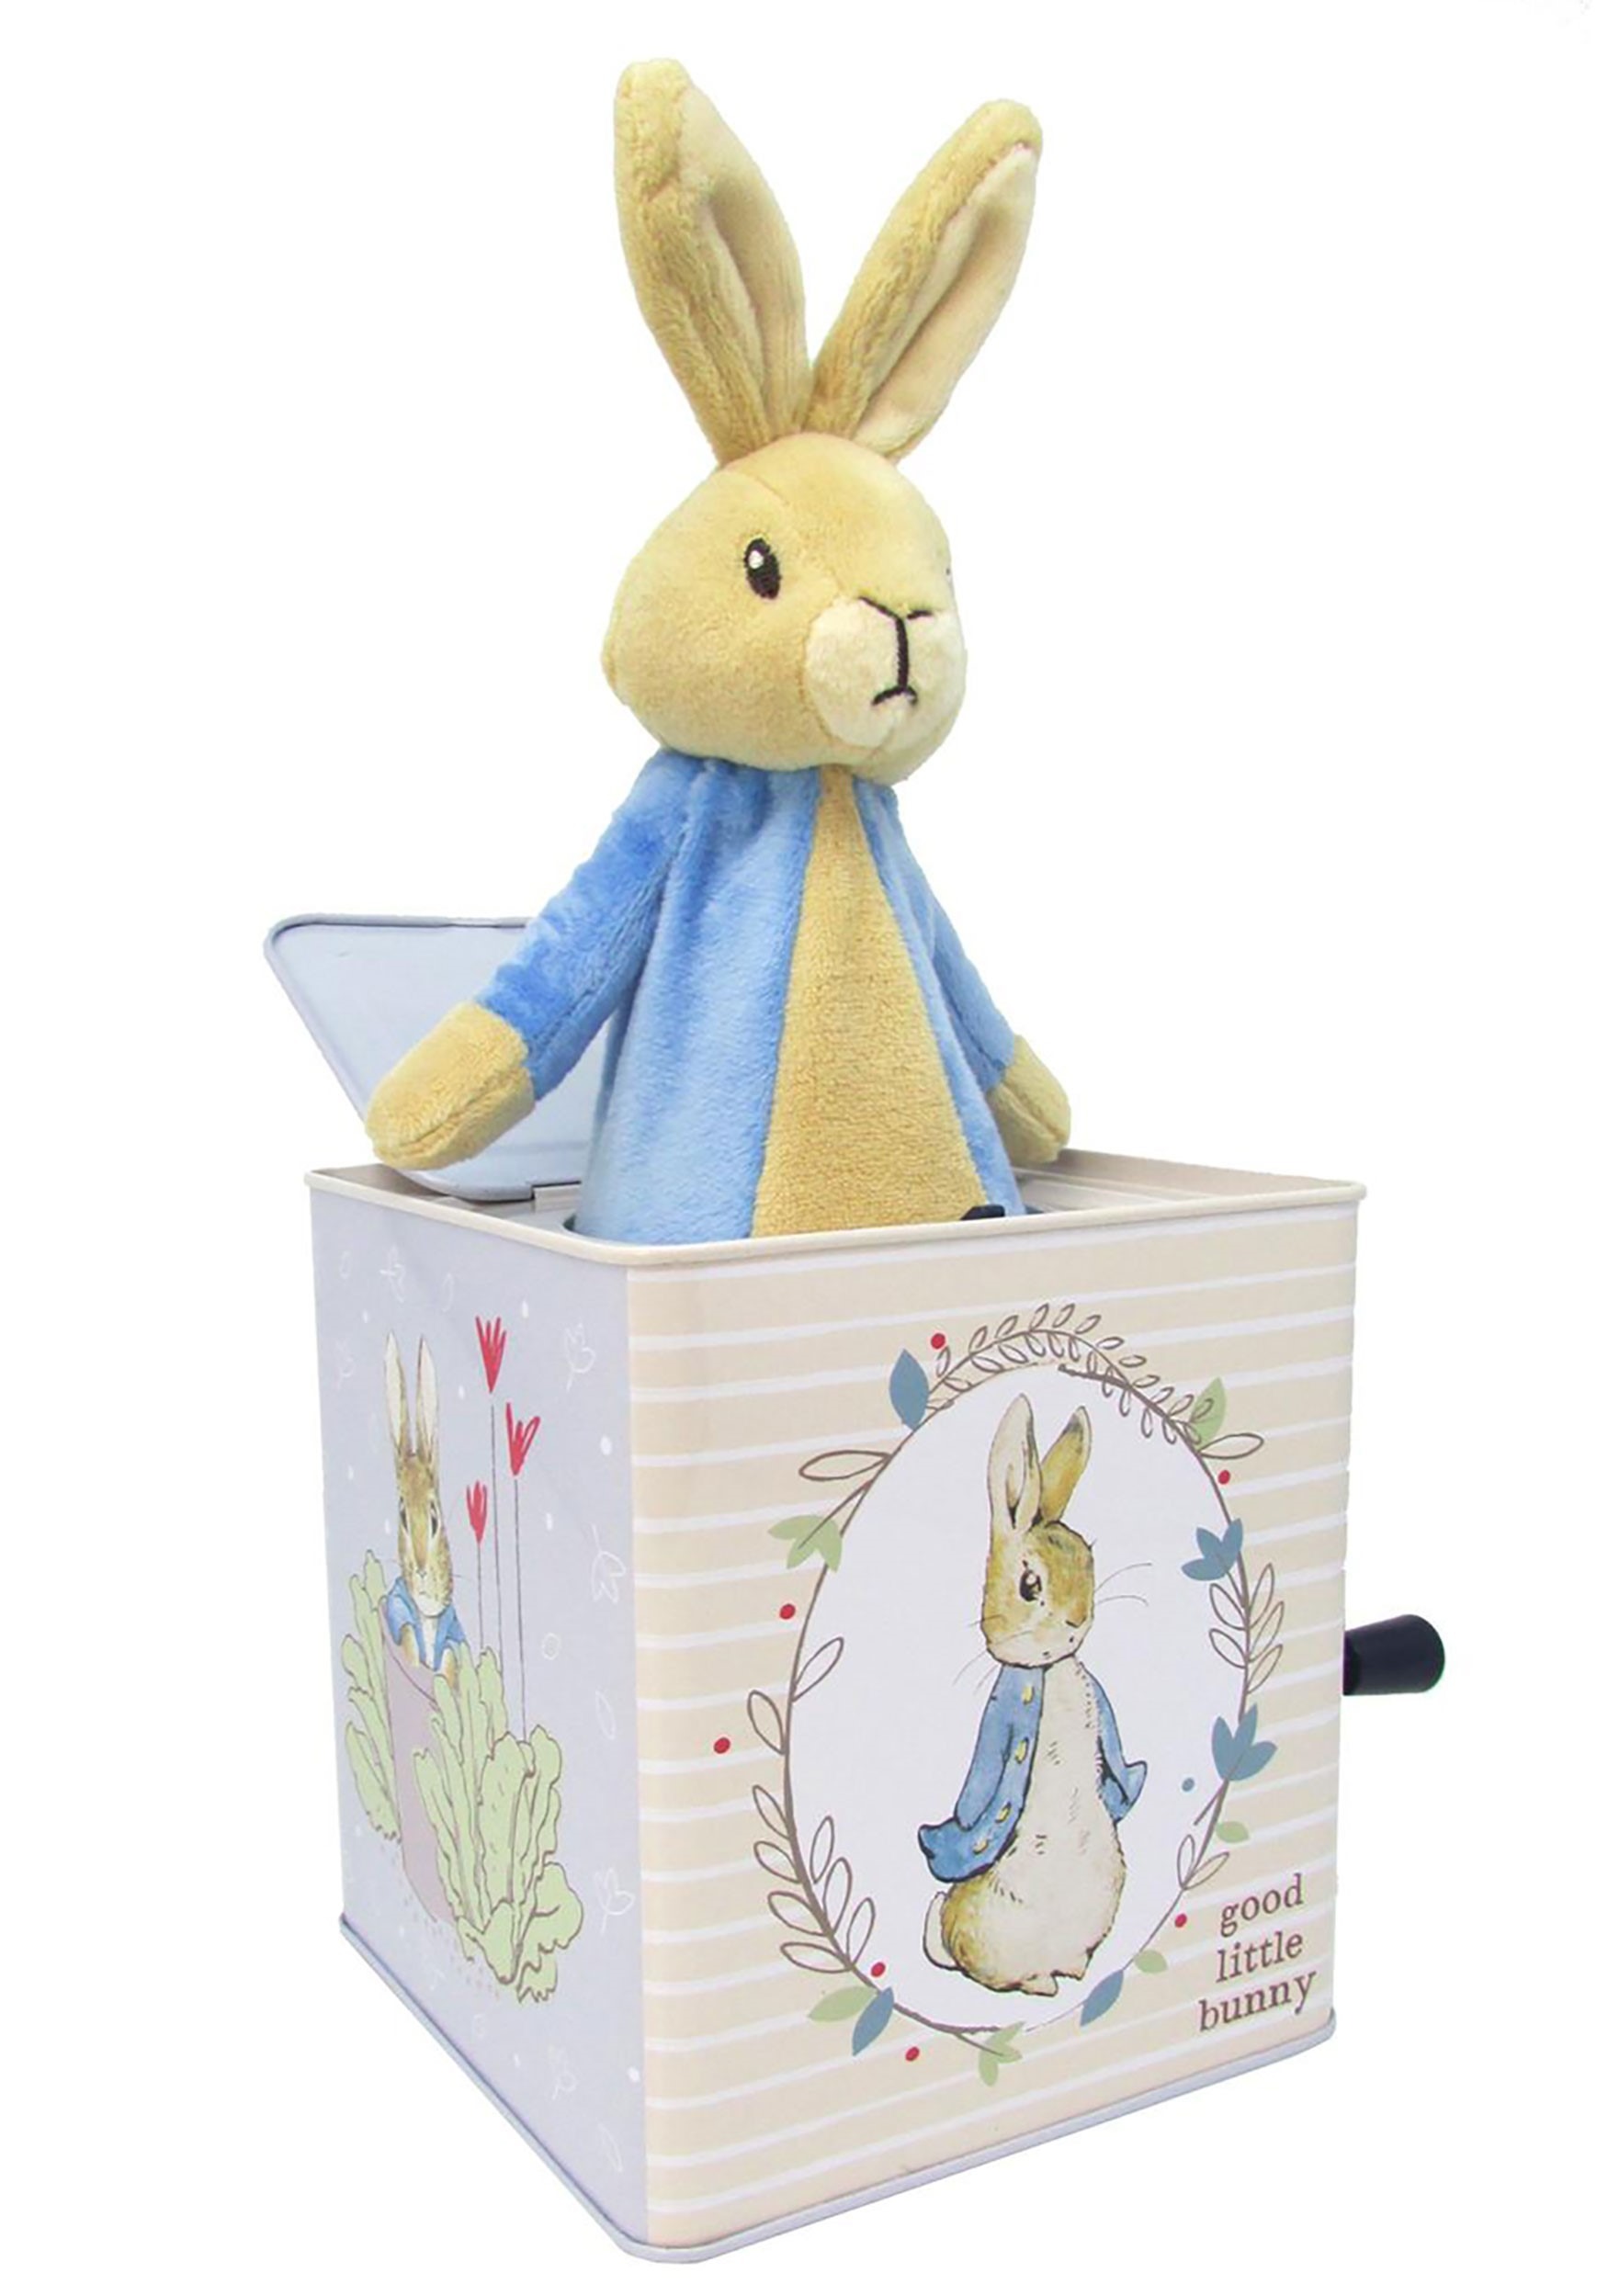 peter rabbit toy box